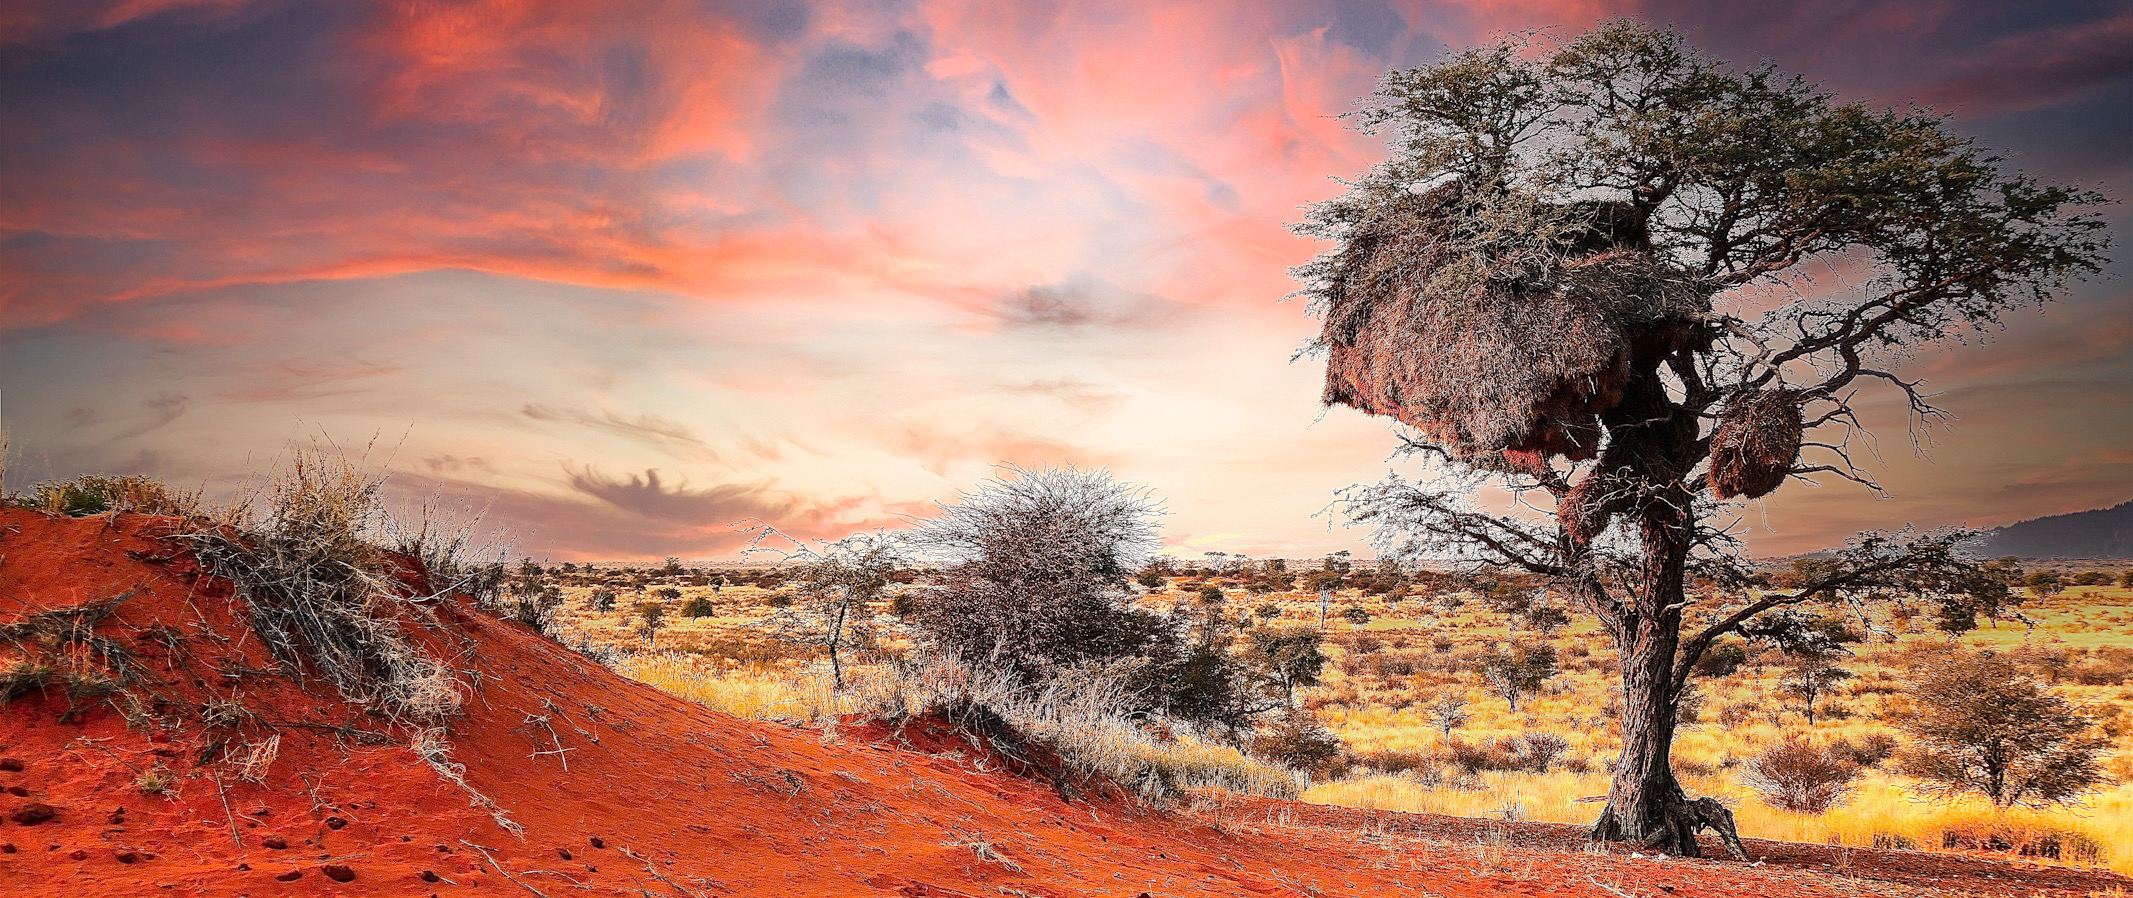 Kalahari Red Dune Landscapes